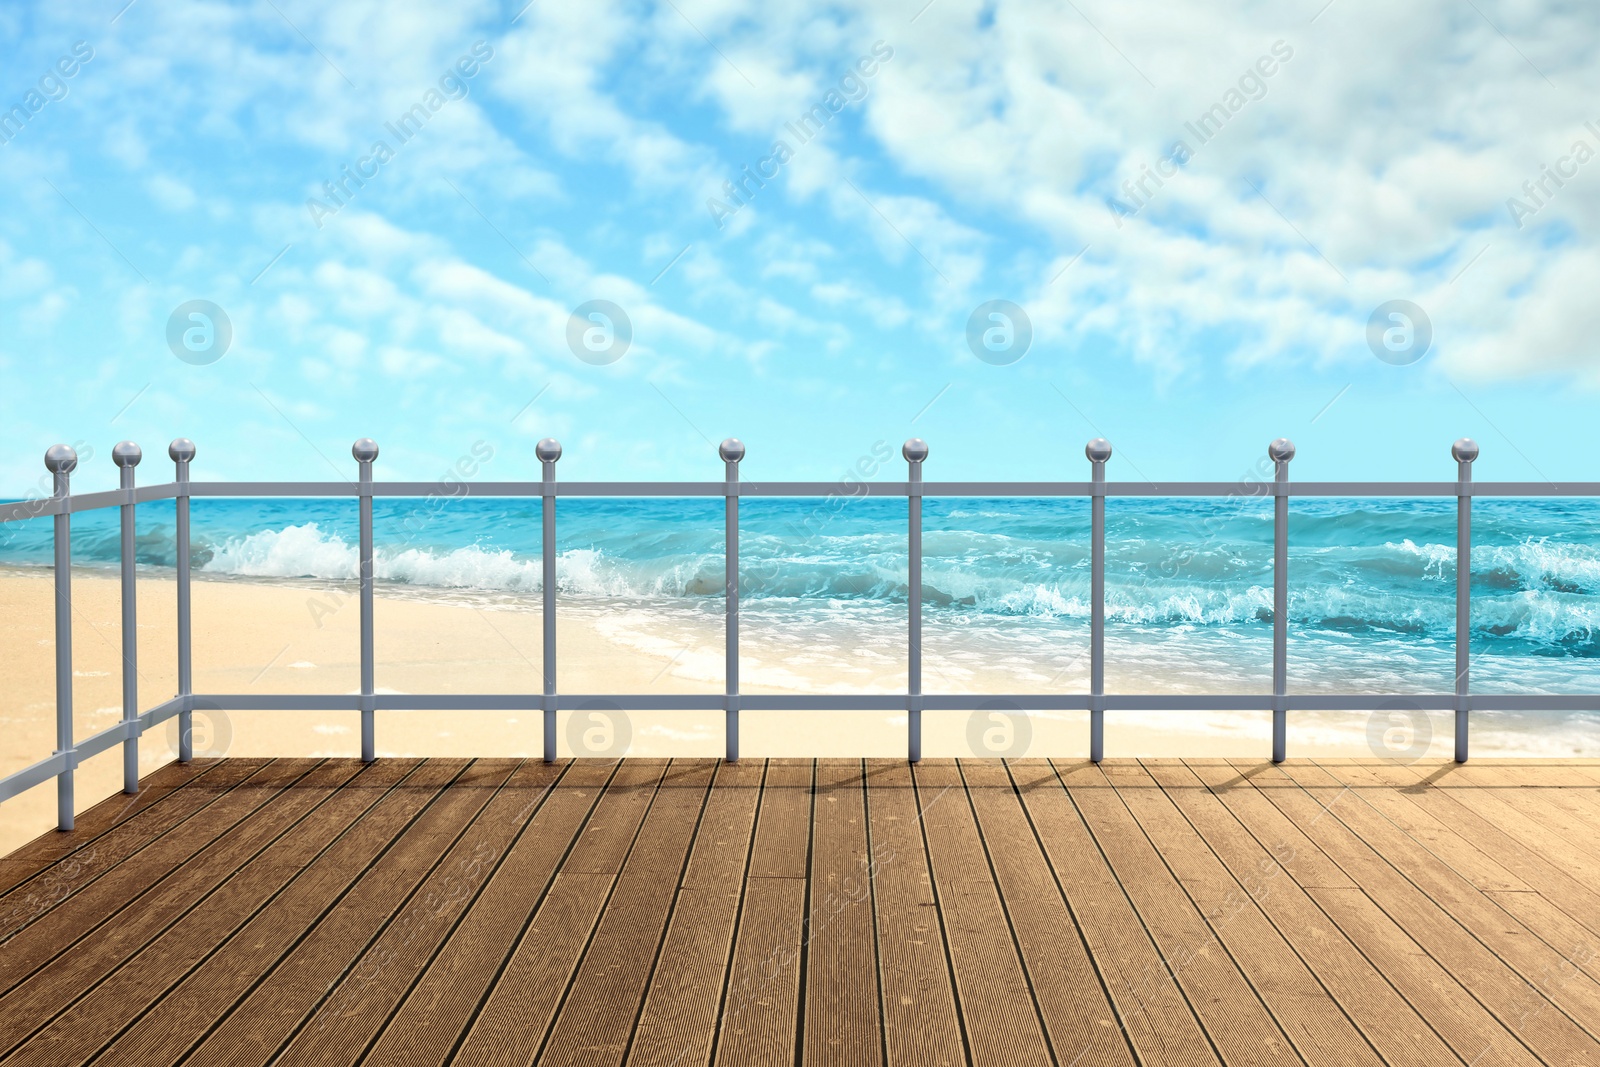 Image of Outdoor wooden terrace revealing picturesque view on ocean shore